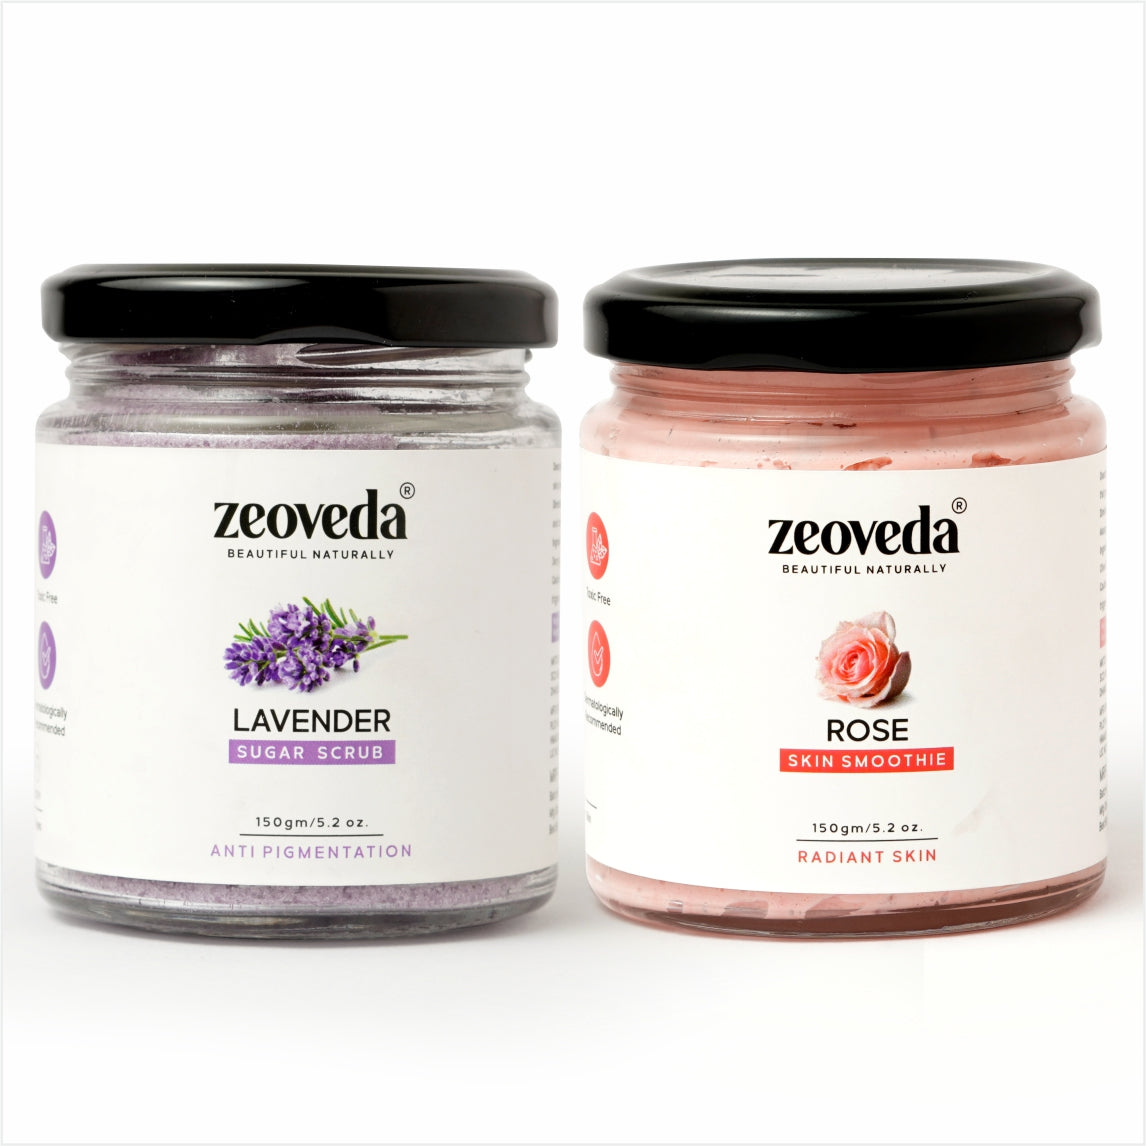 Lavender Sugar Scrub(150GM) + Rose Skin Smoothie(100ML) Combo For Smooth & Clean Skin